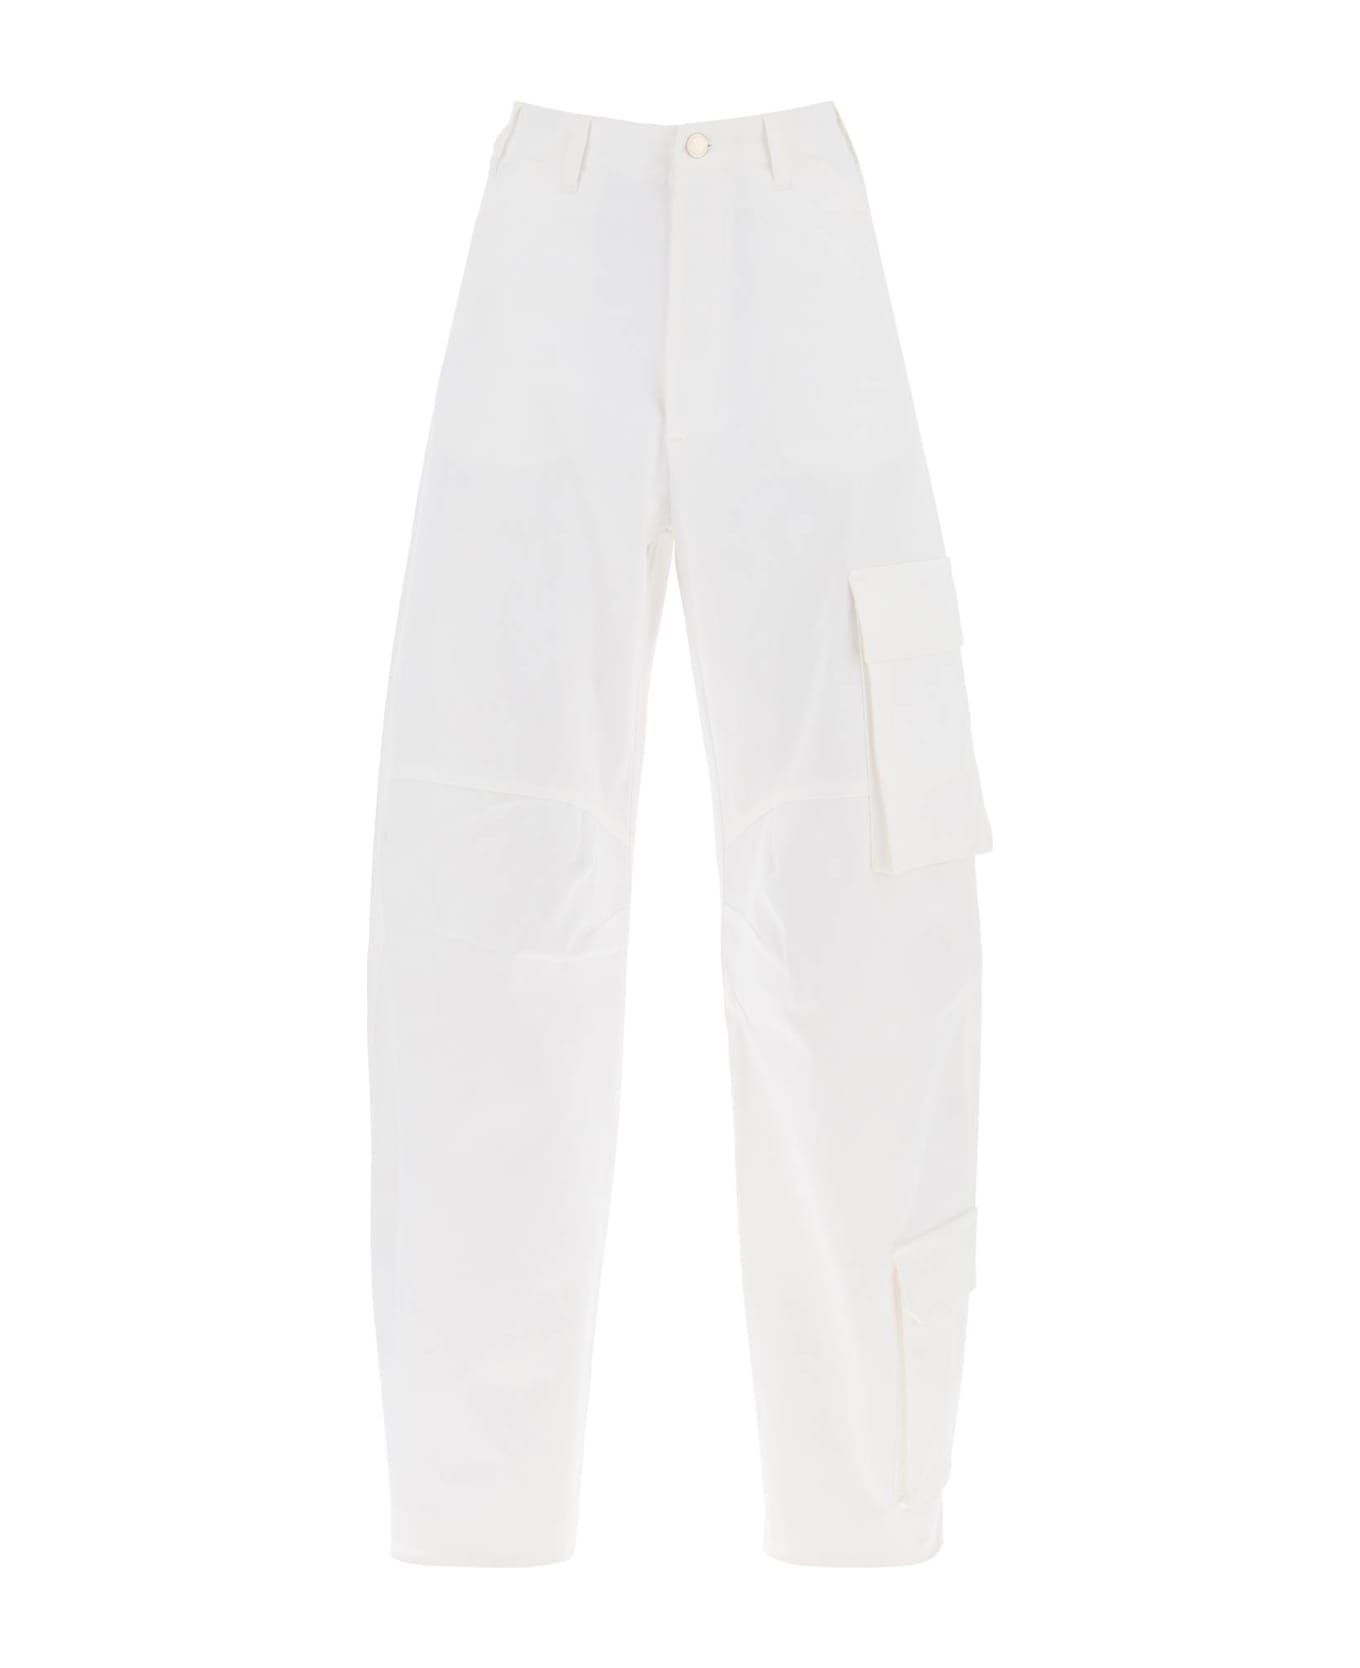 DARKPARK Rose Cargo Pants - WHITE (White)